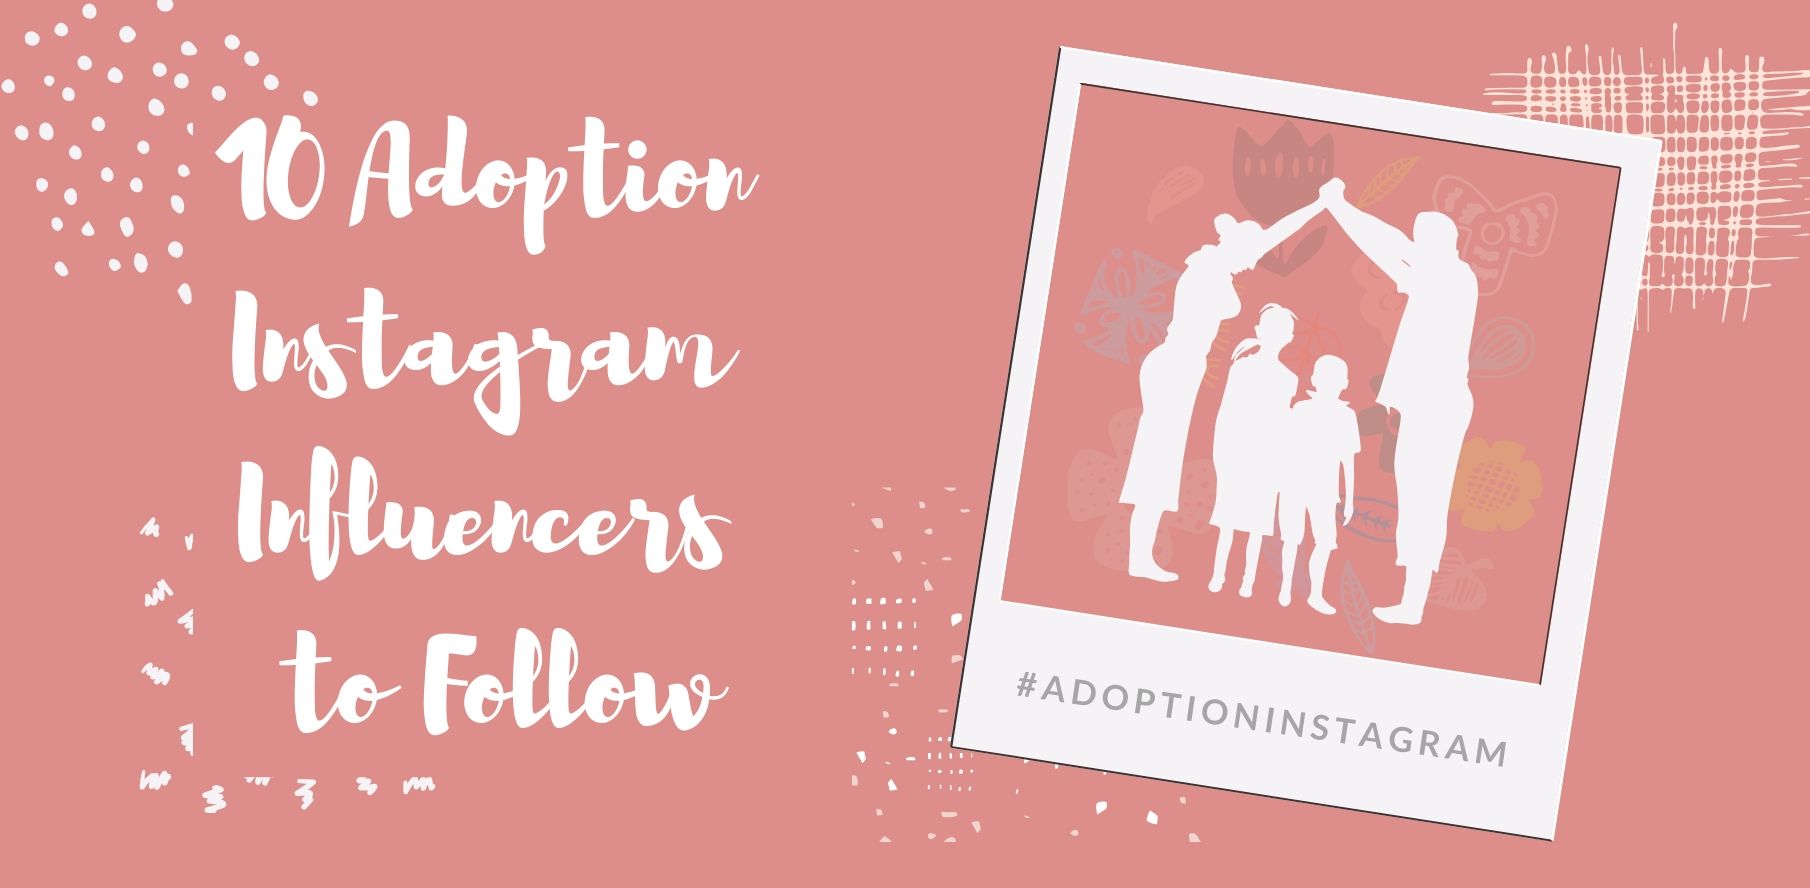 adoption instagram